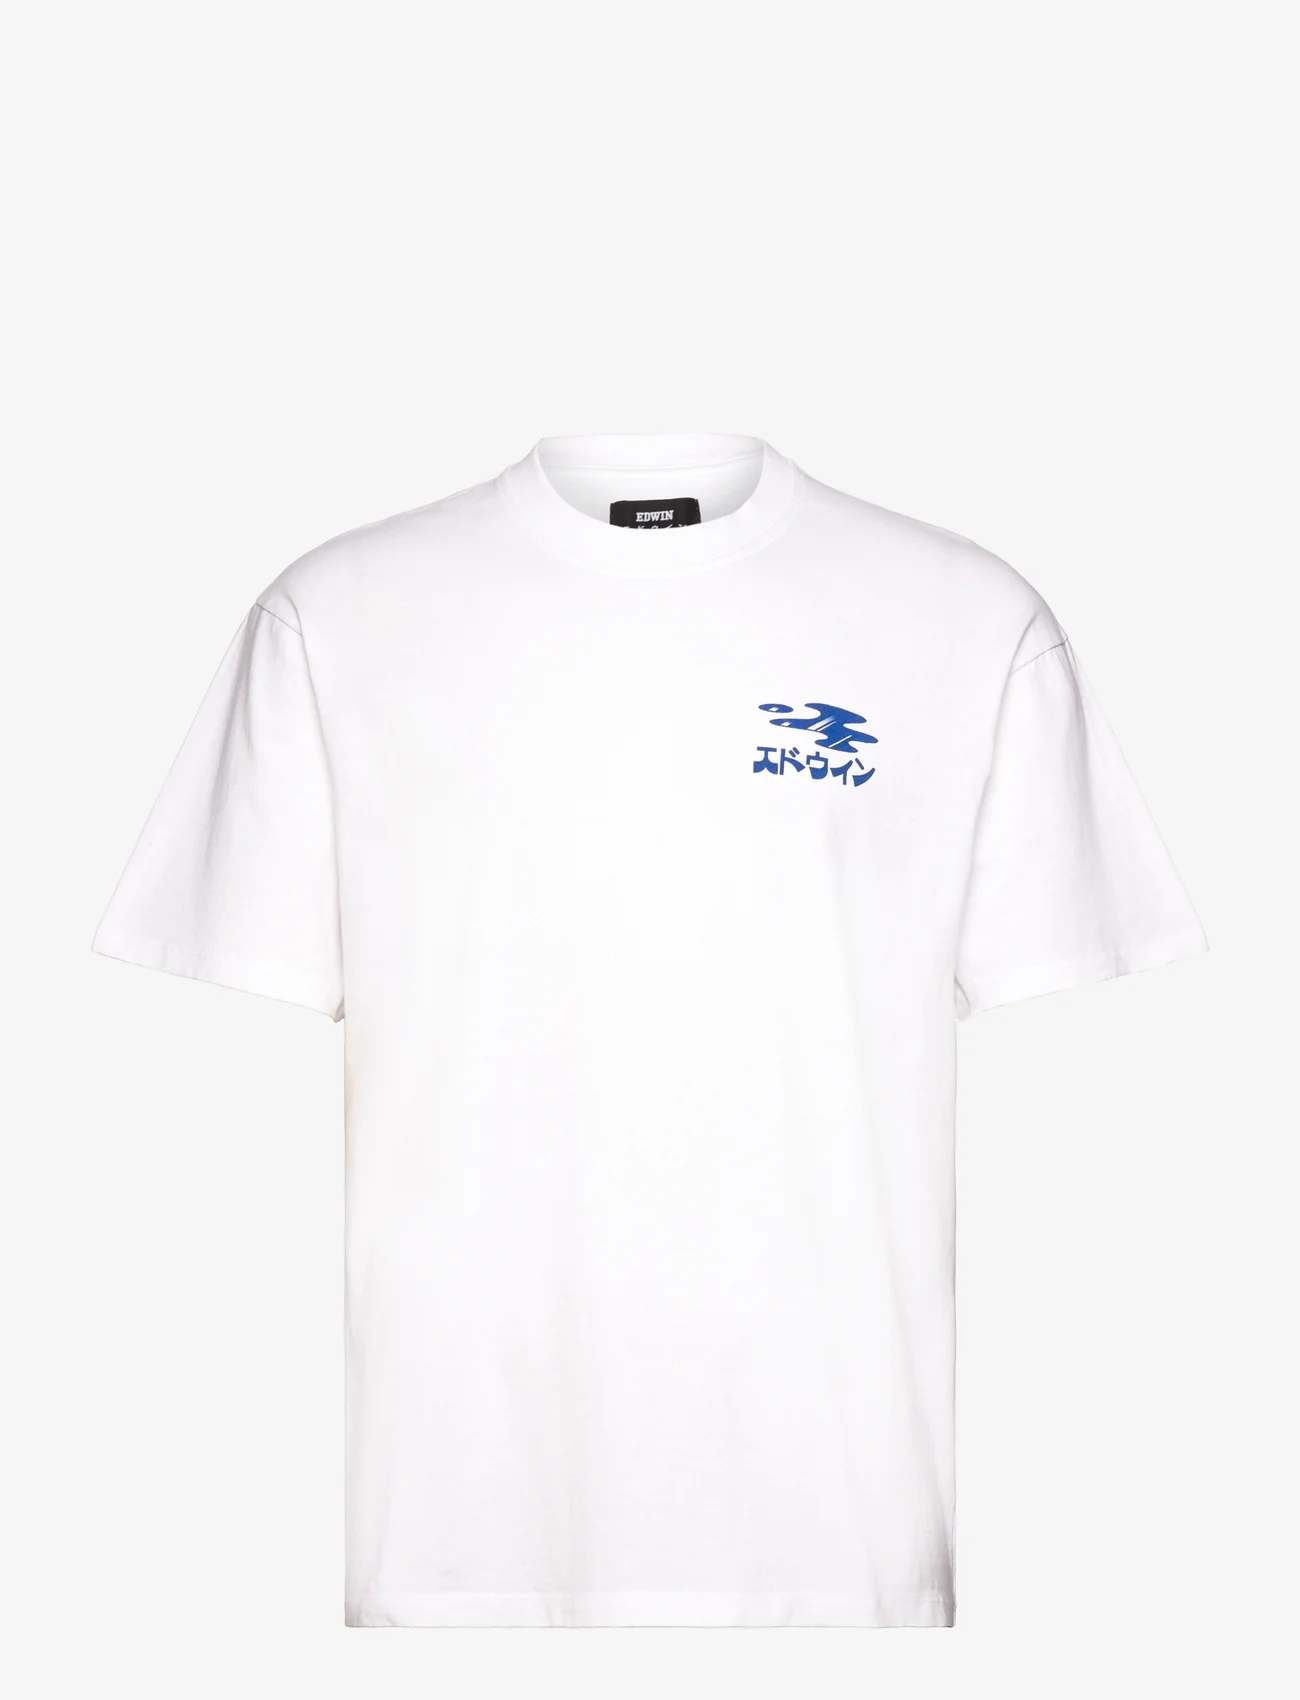 Edwin - STAY HYDRATED T-SHIRT - WHITE - kortärmade t-shirts - white - 0